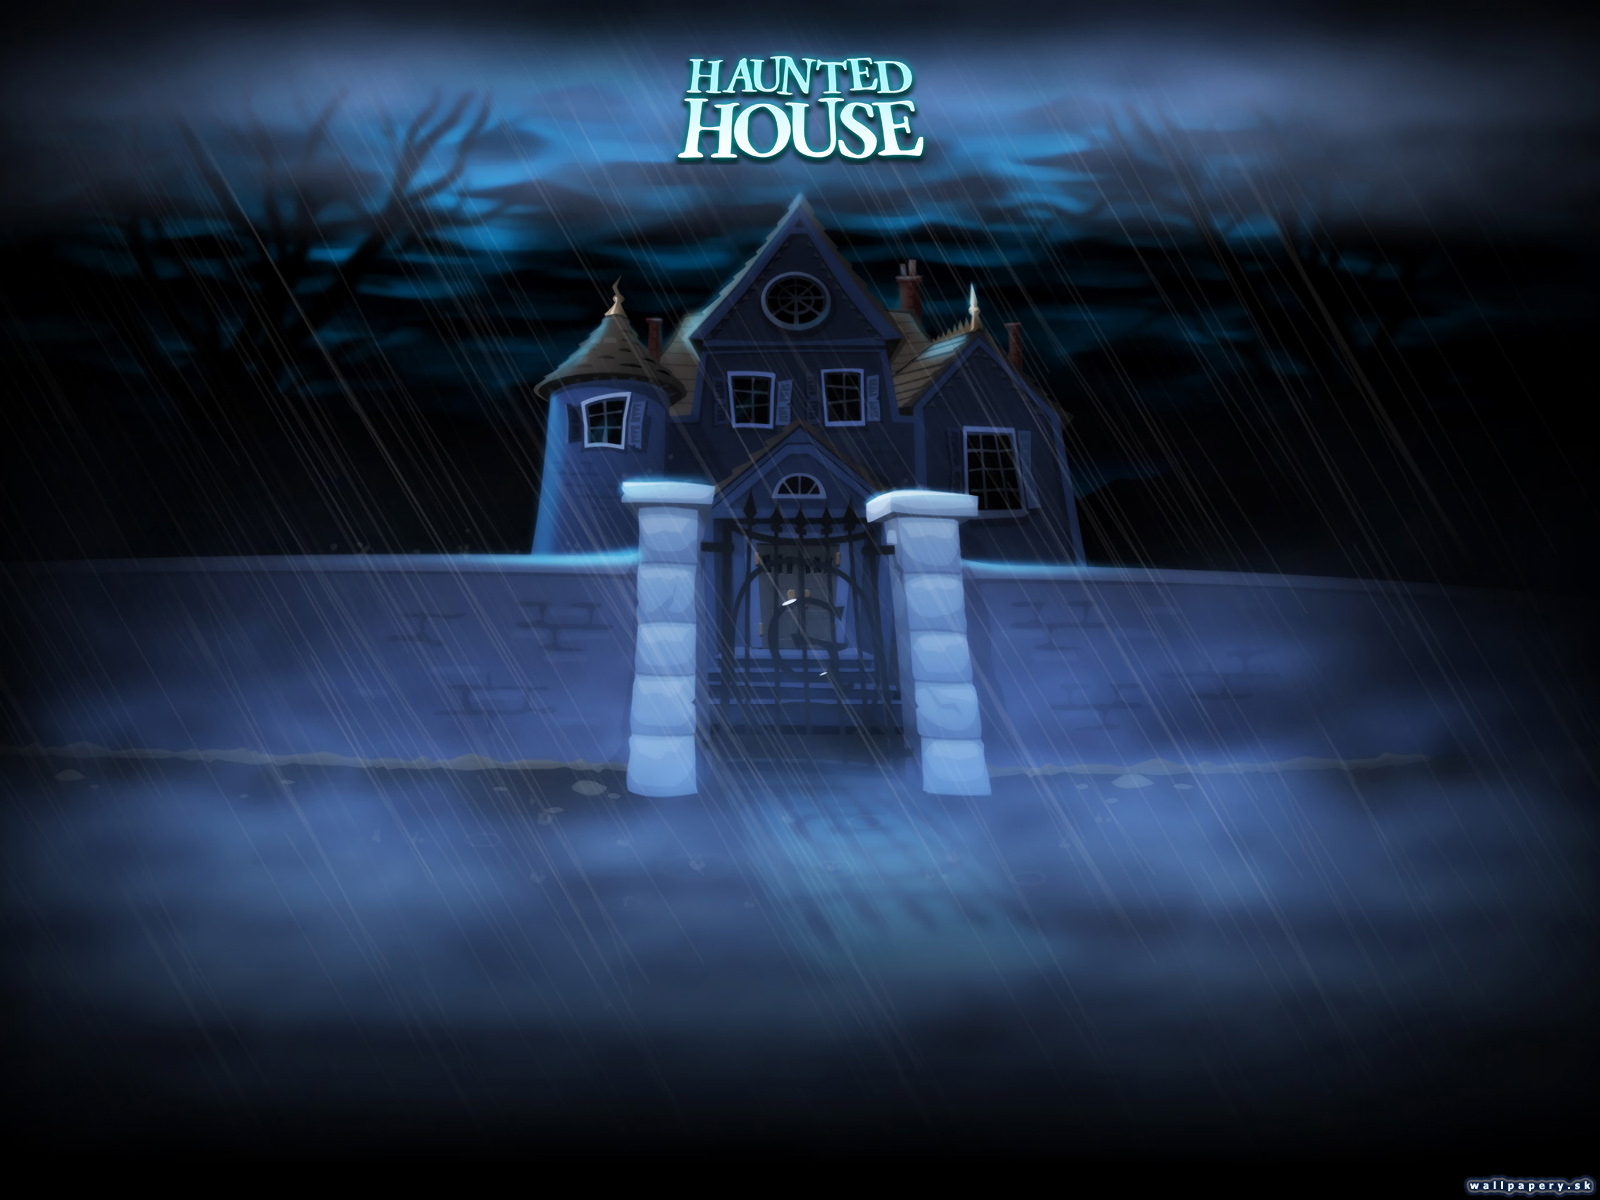 Haunted House (2010) - wallpaper 2